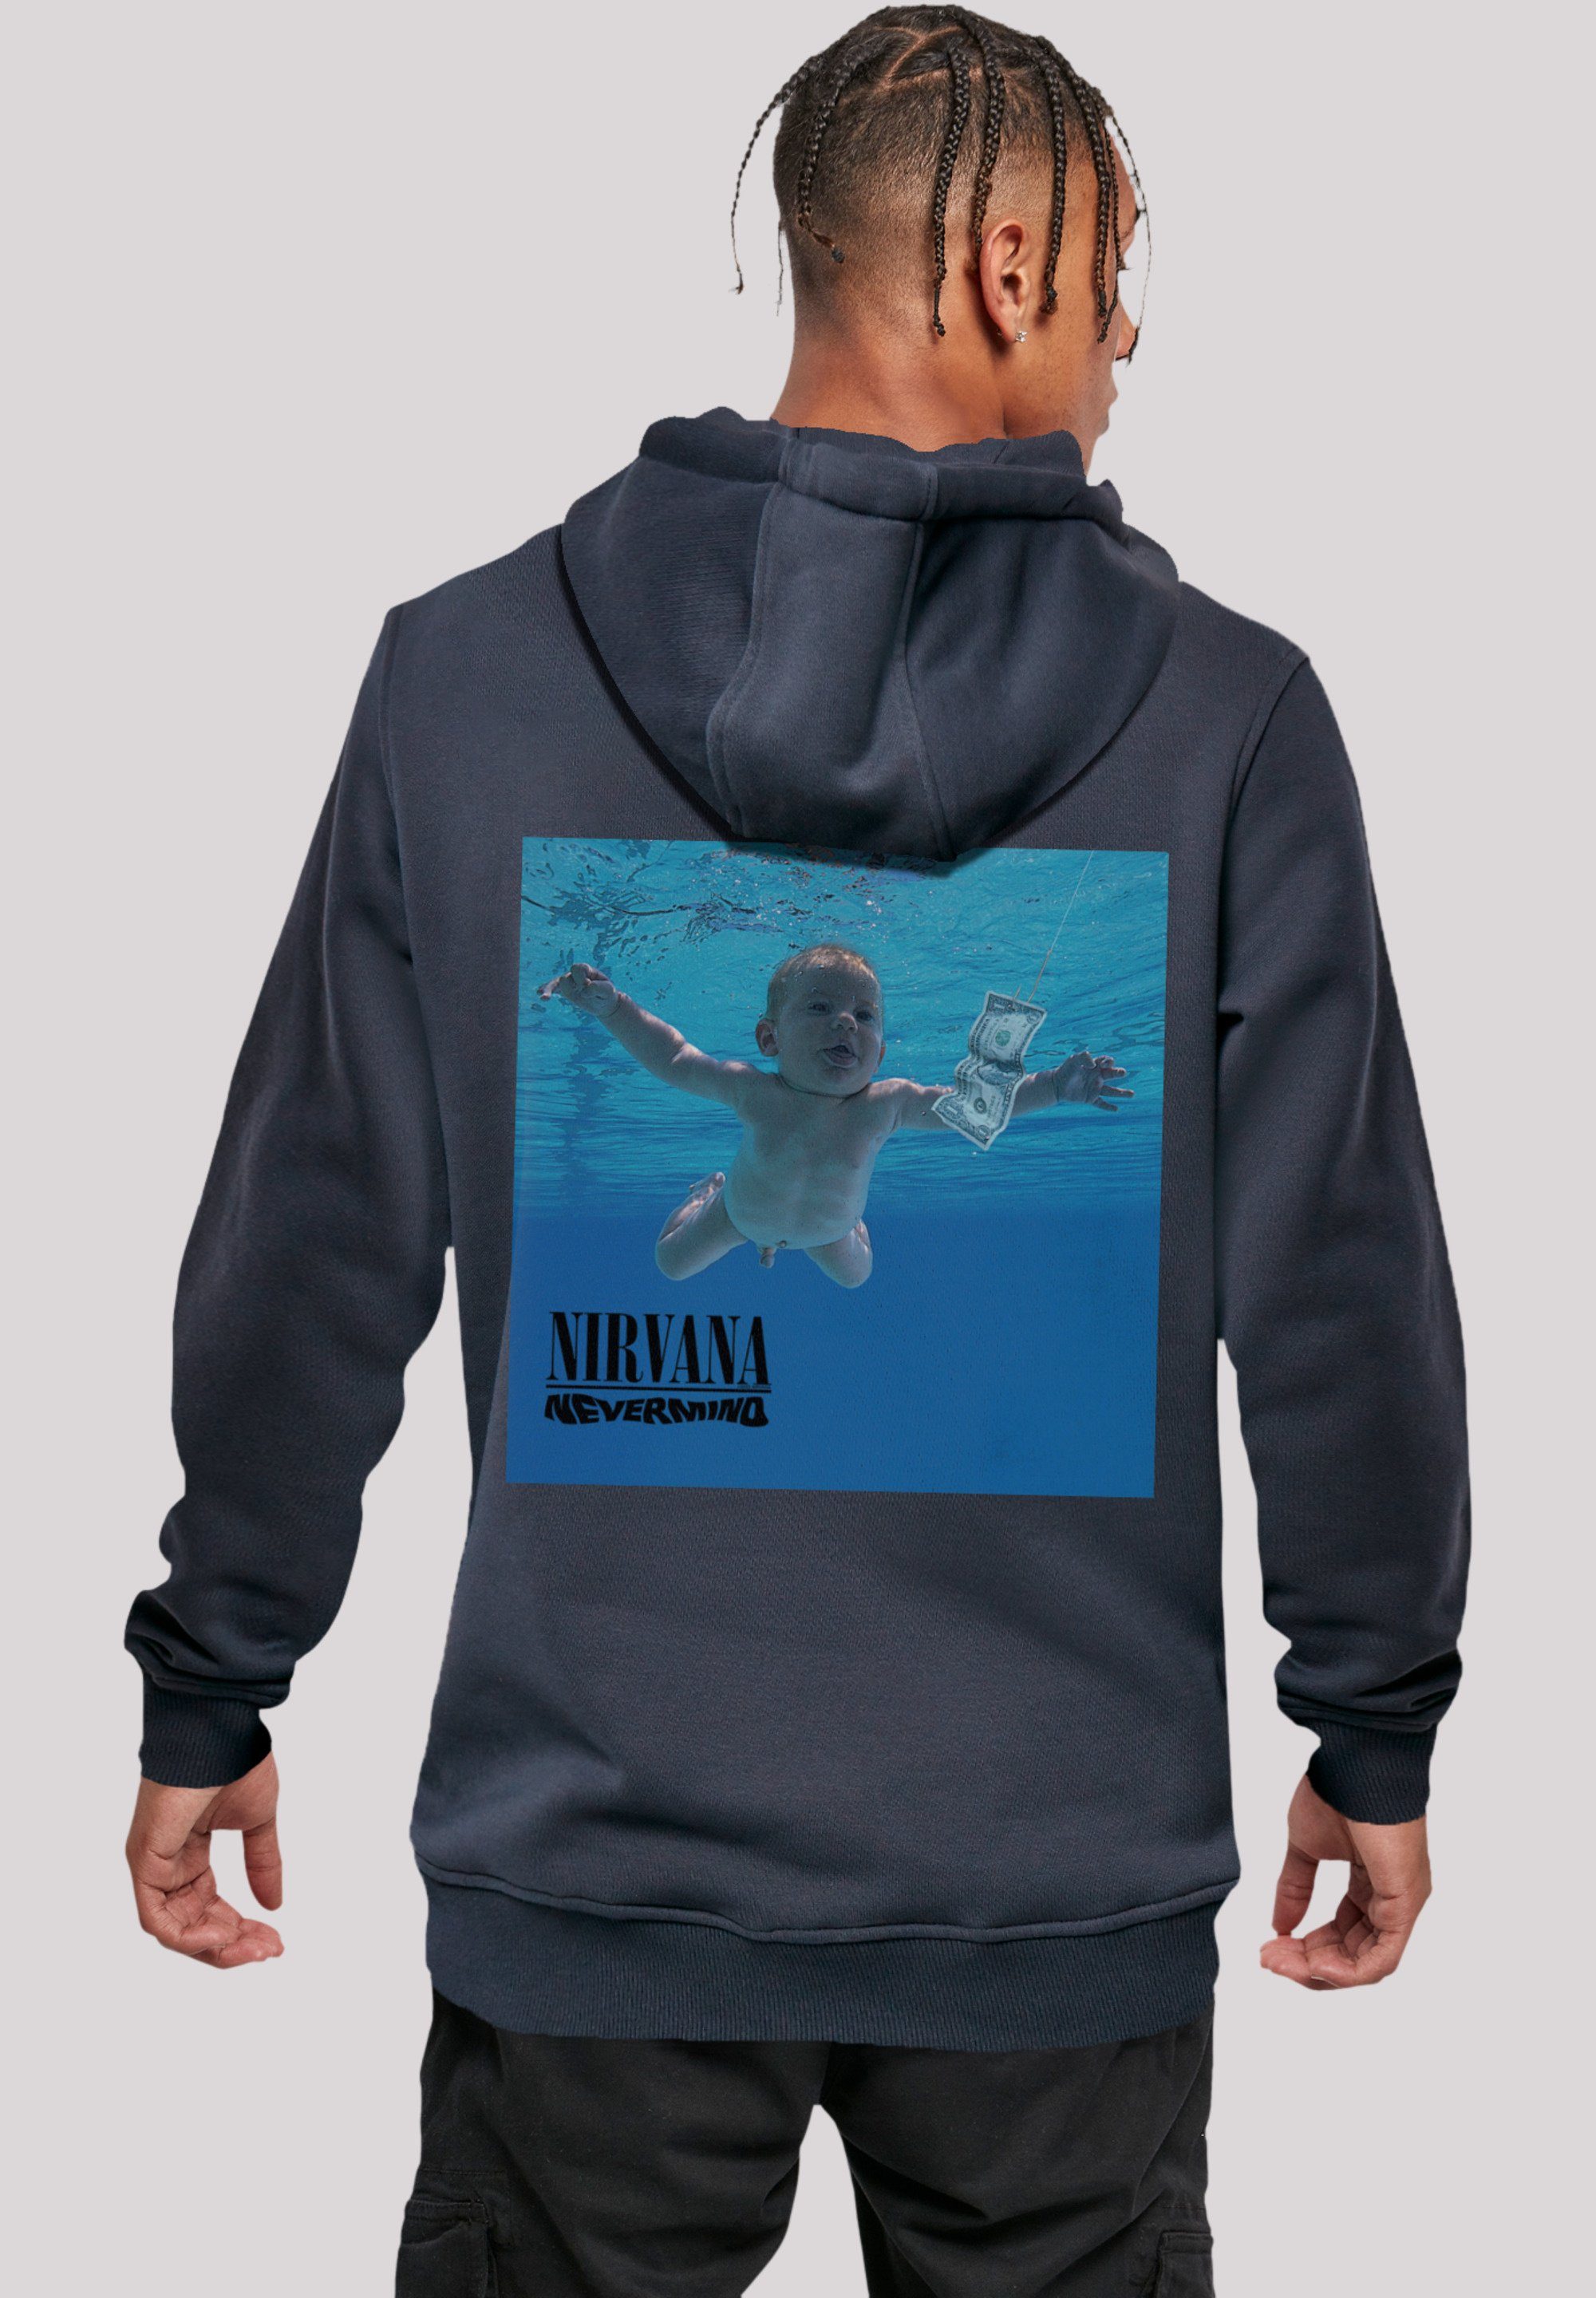 F4NT4STIC Kapuzenpullover Nirvana Rock Band Nevermind Album Premium Qualität navy